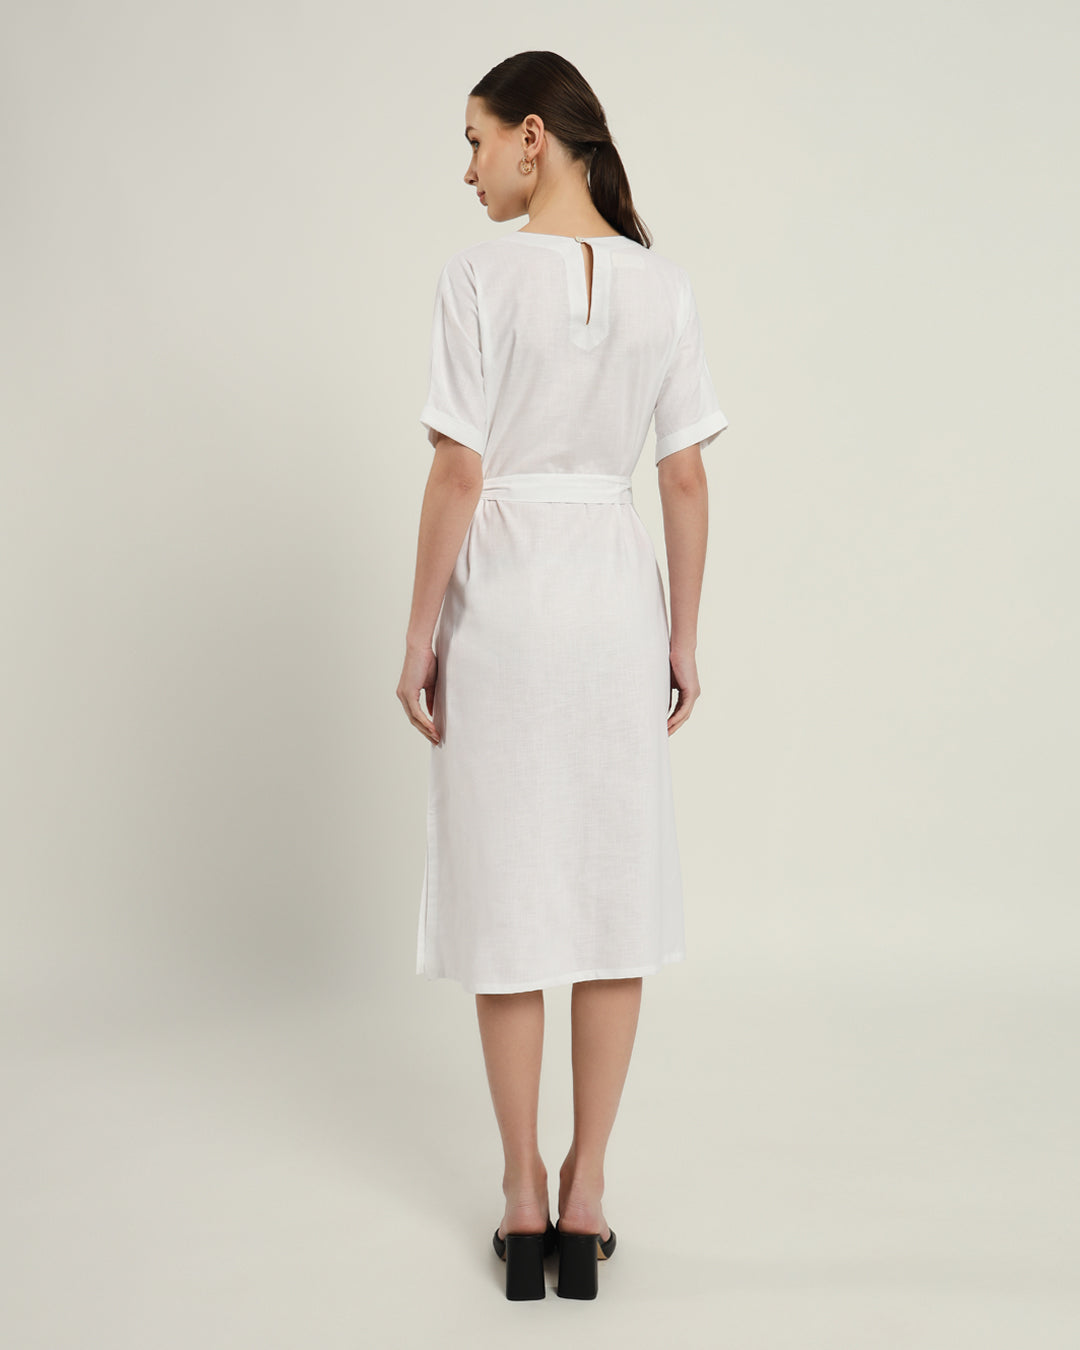 The Tayma Daisy White Linen Dress